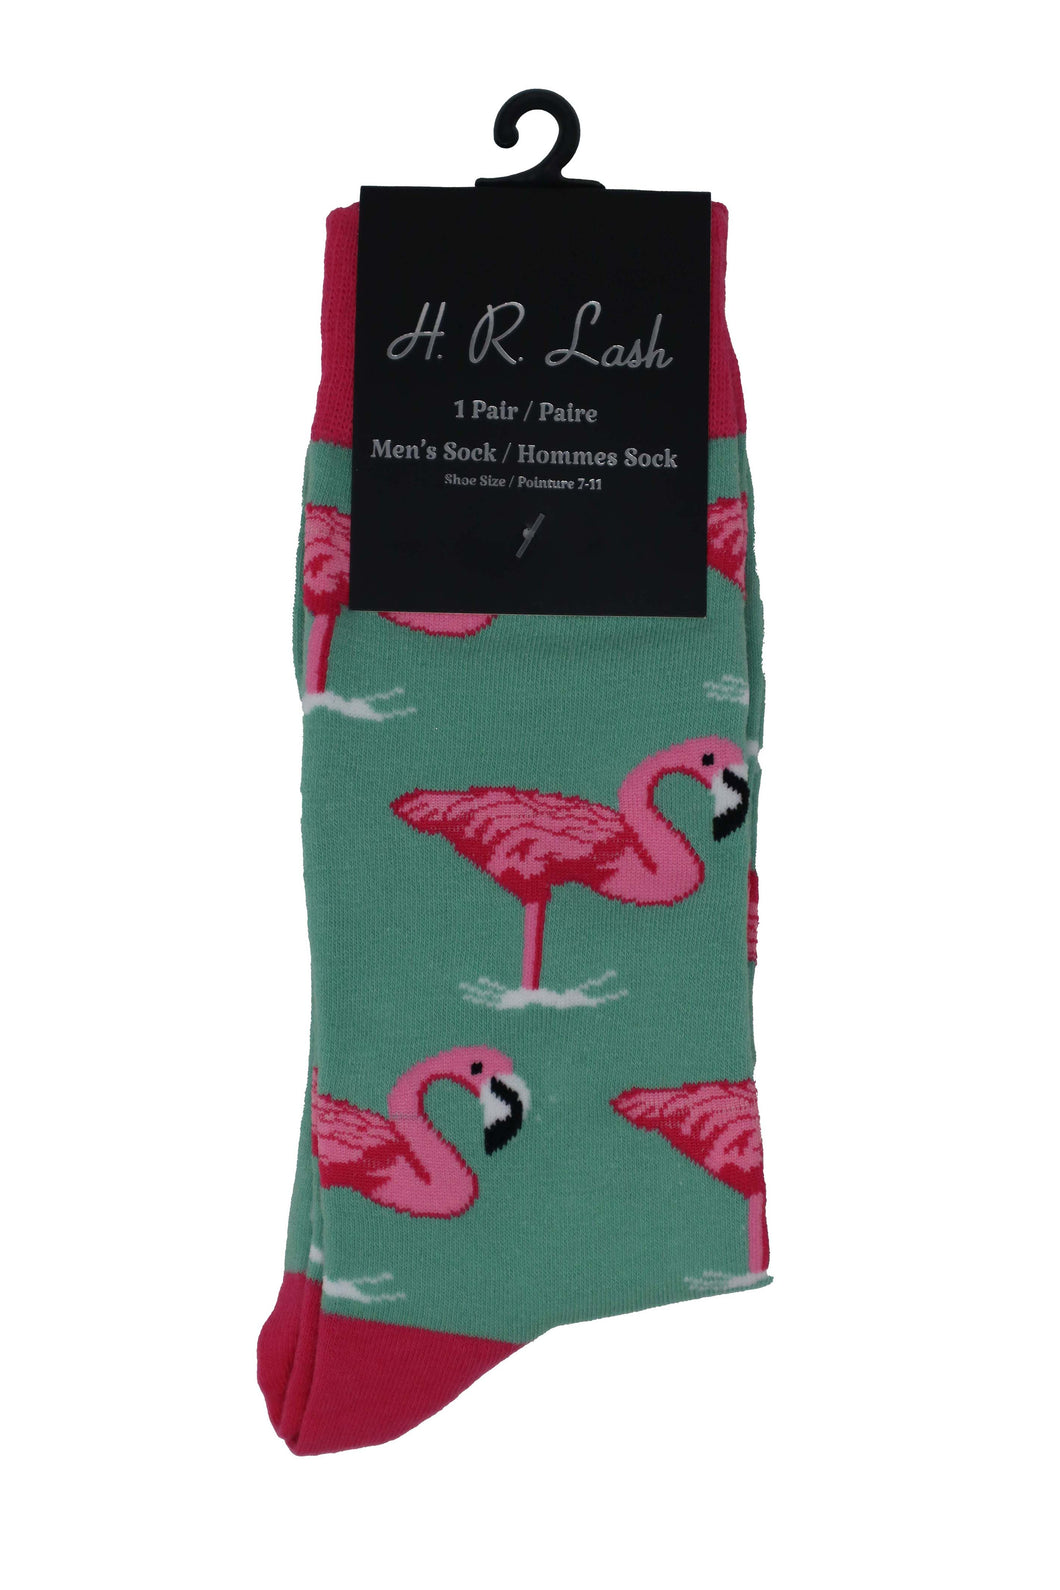 H. R. Lash | FS276 | Fun Socks | Flamingos